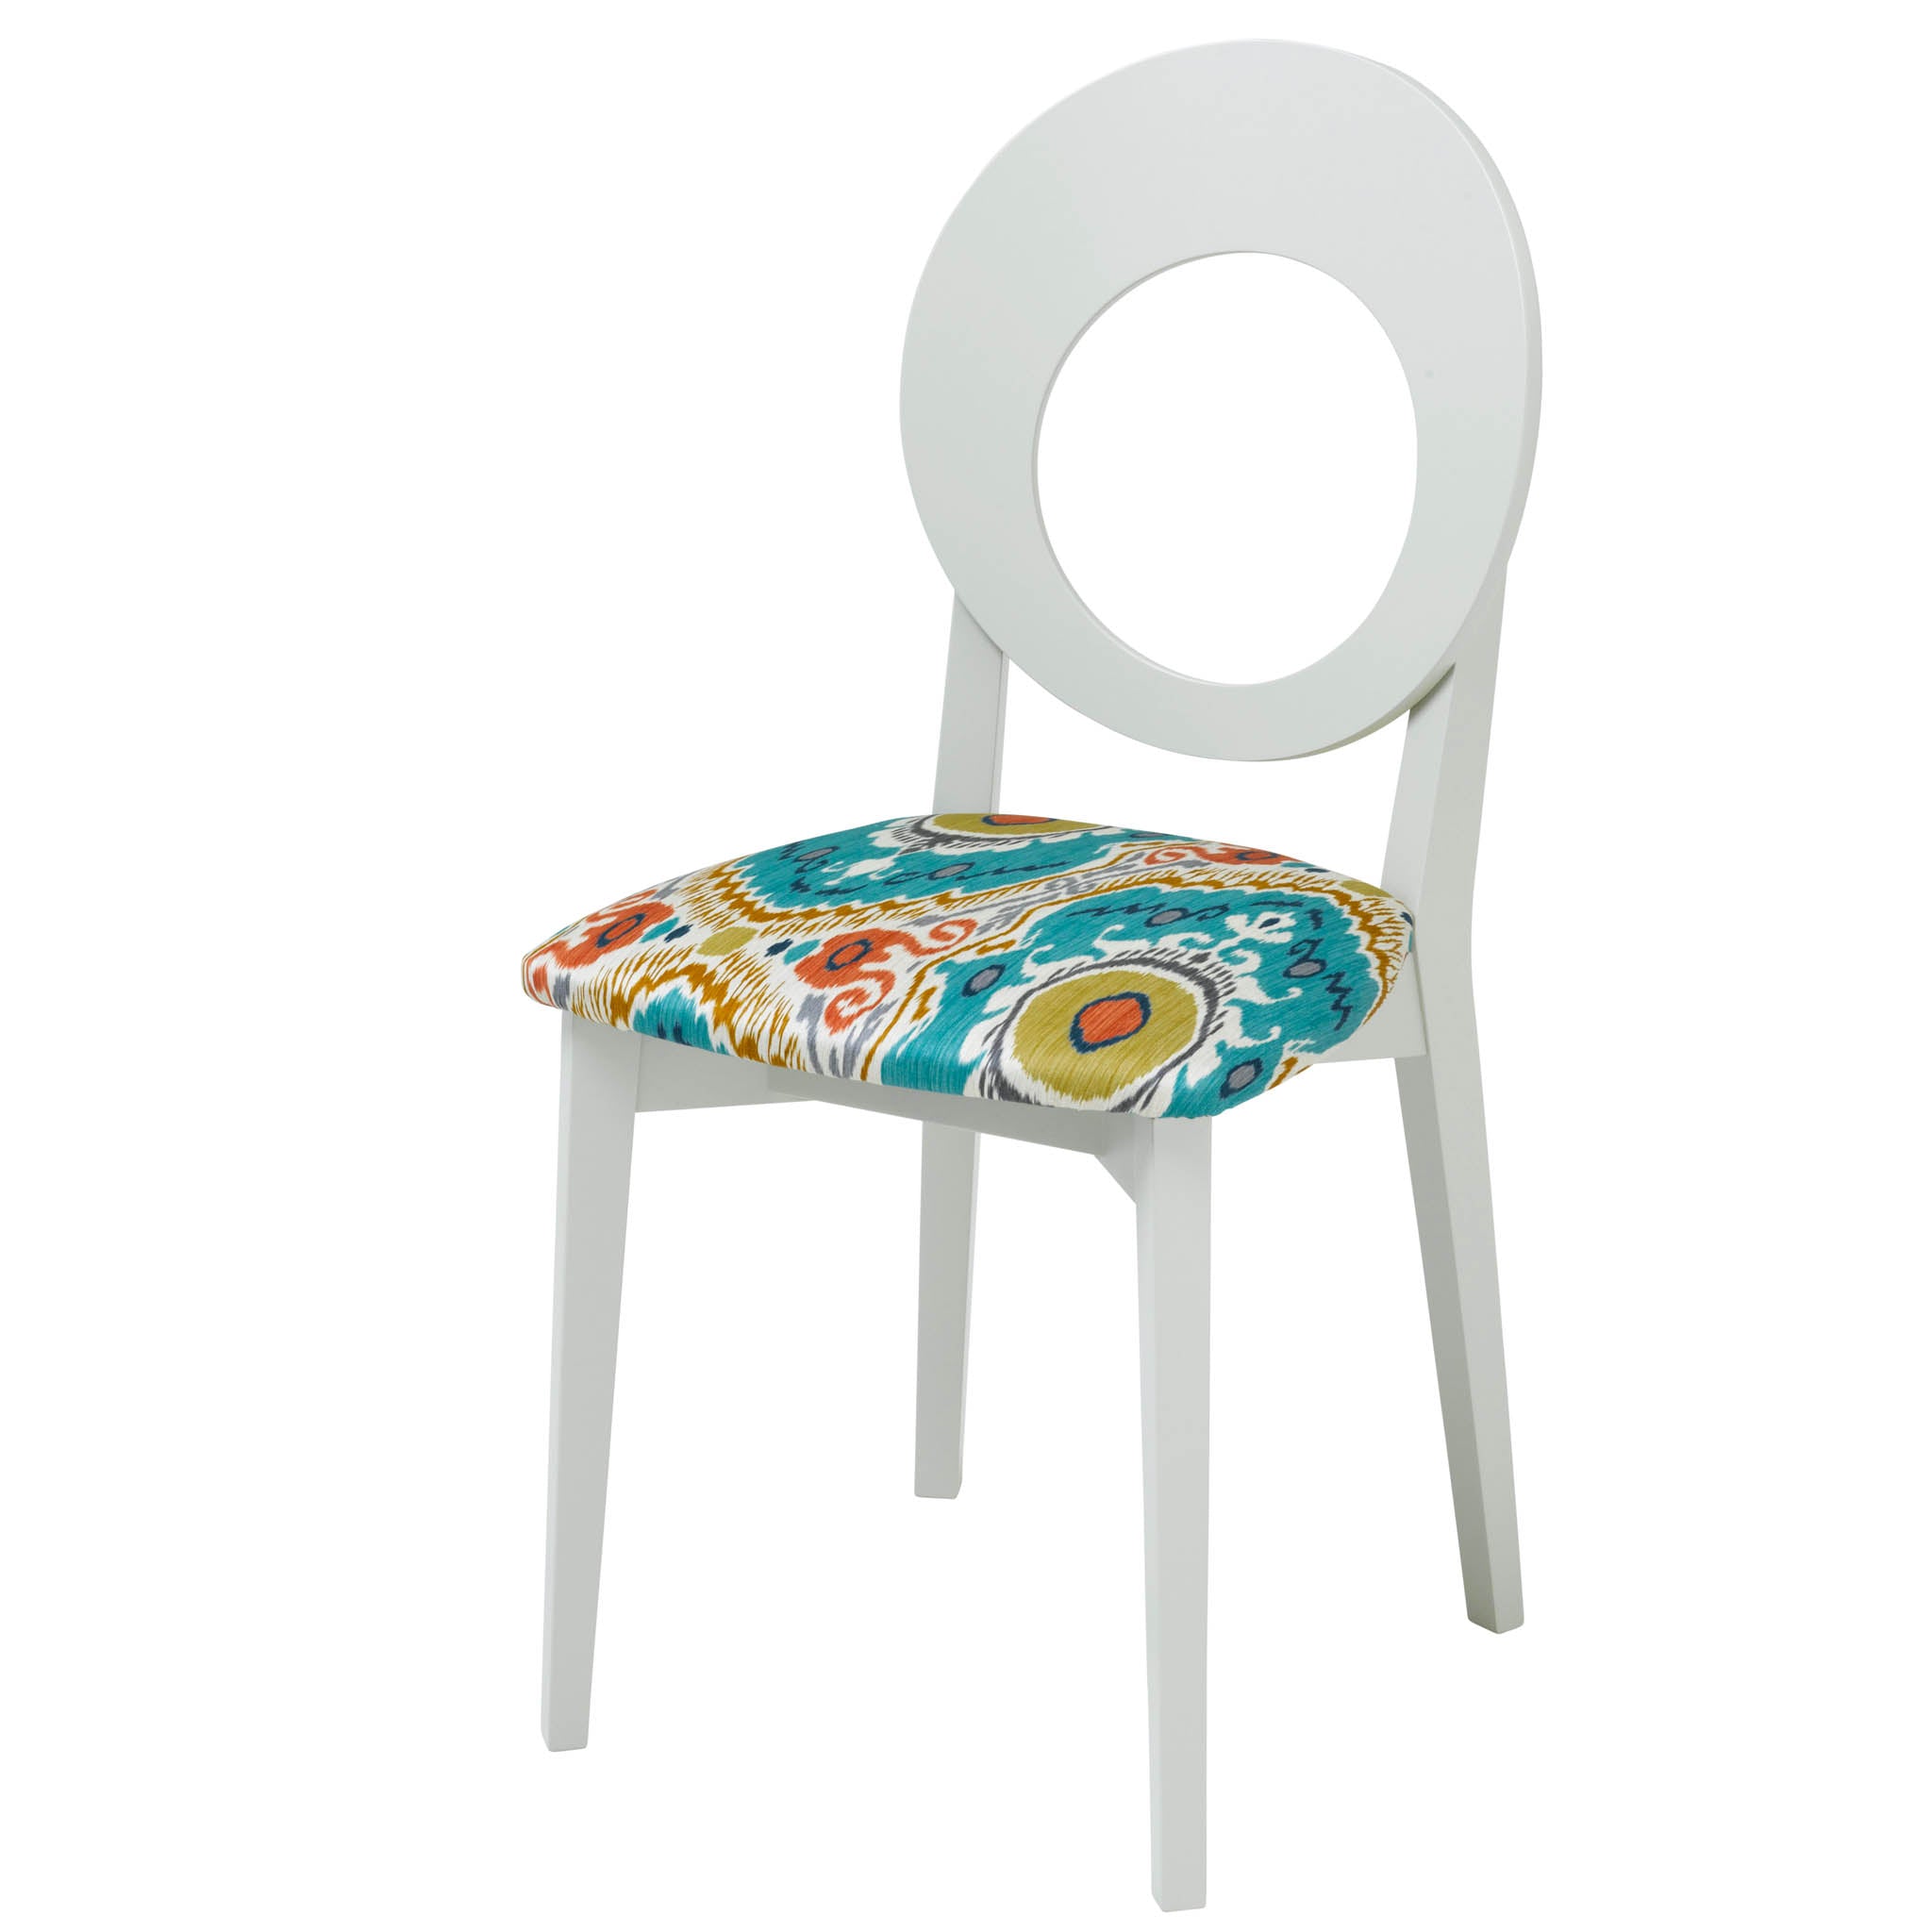 Chloe Dining Chair upholstered in Niyali from Sanderson